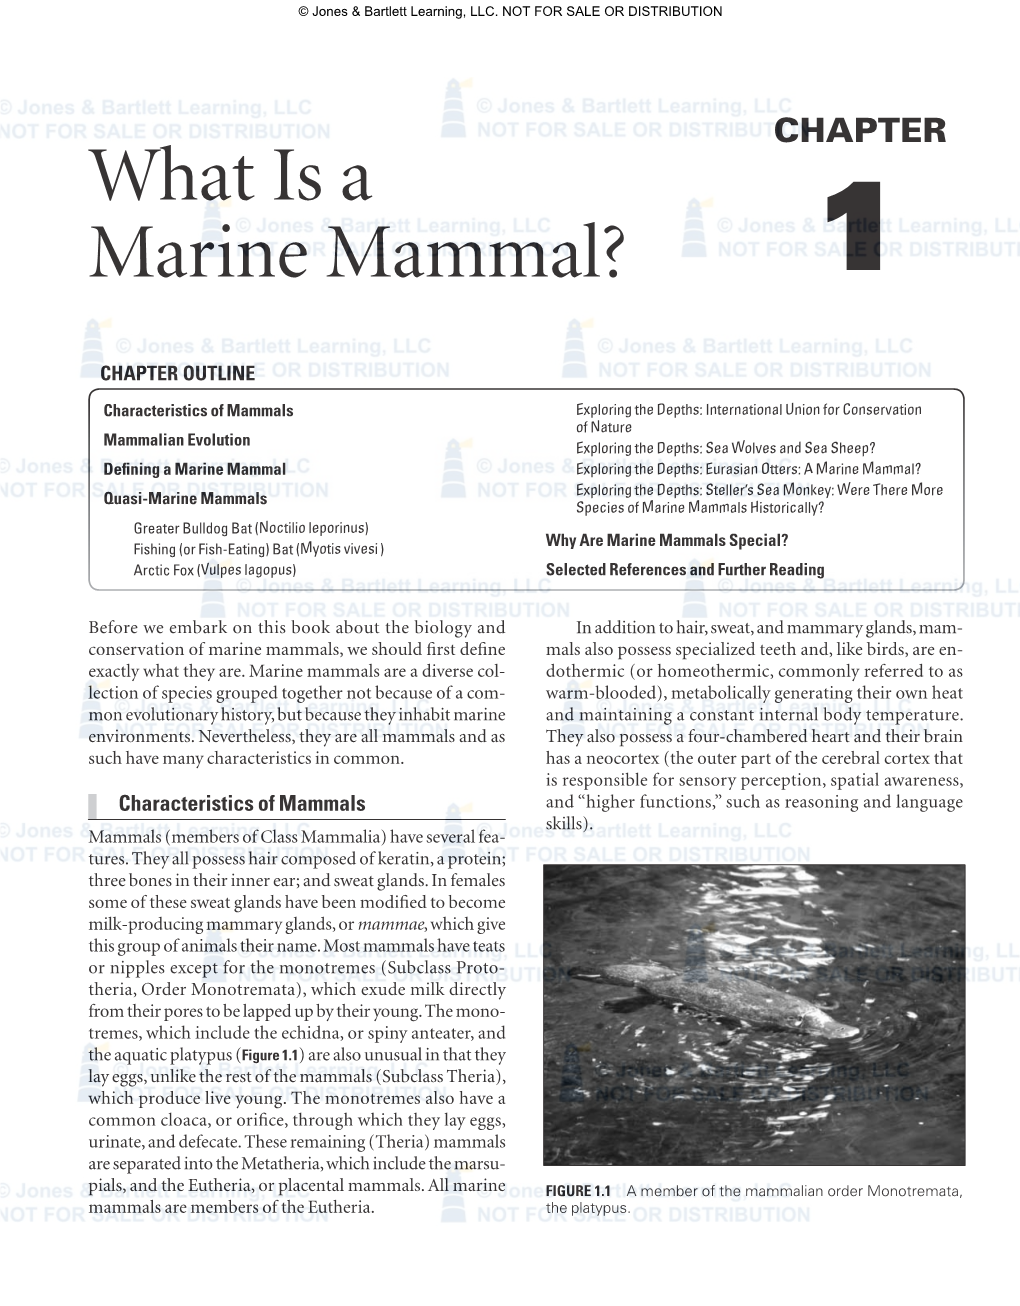 What Is a Marine Mammal?